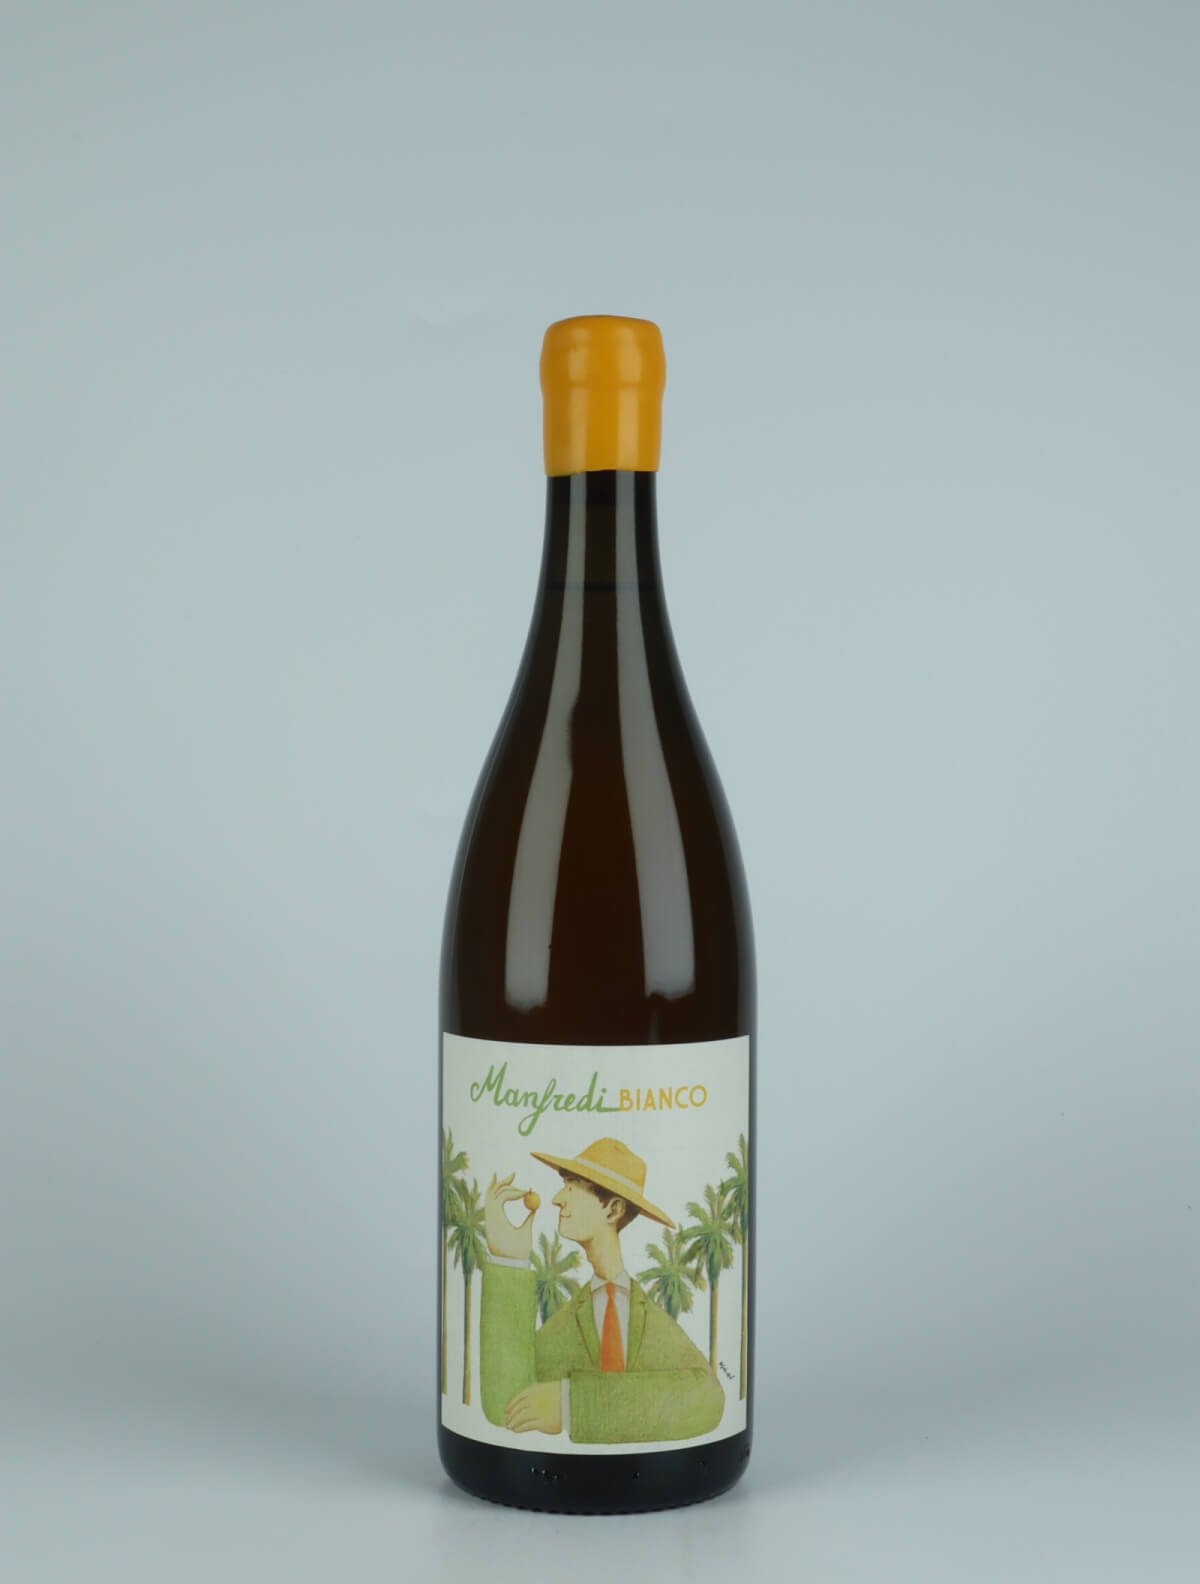 A bottle 2021 Manfredi Bianco White wine from Manfredi Franco, Sicily in Italy